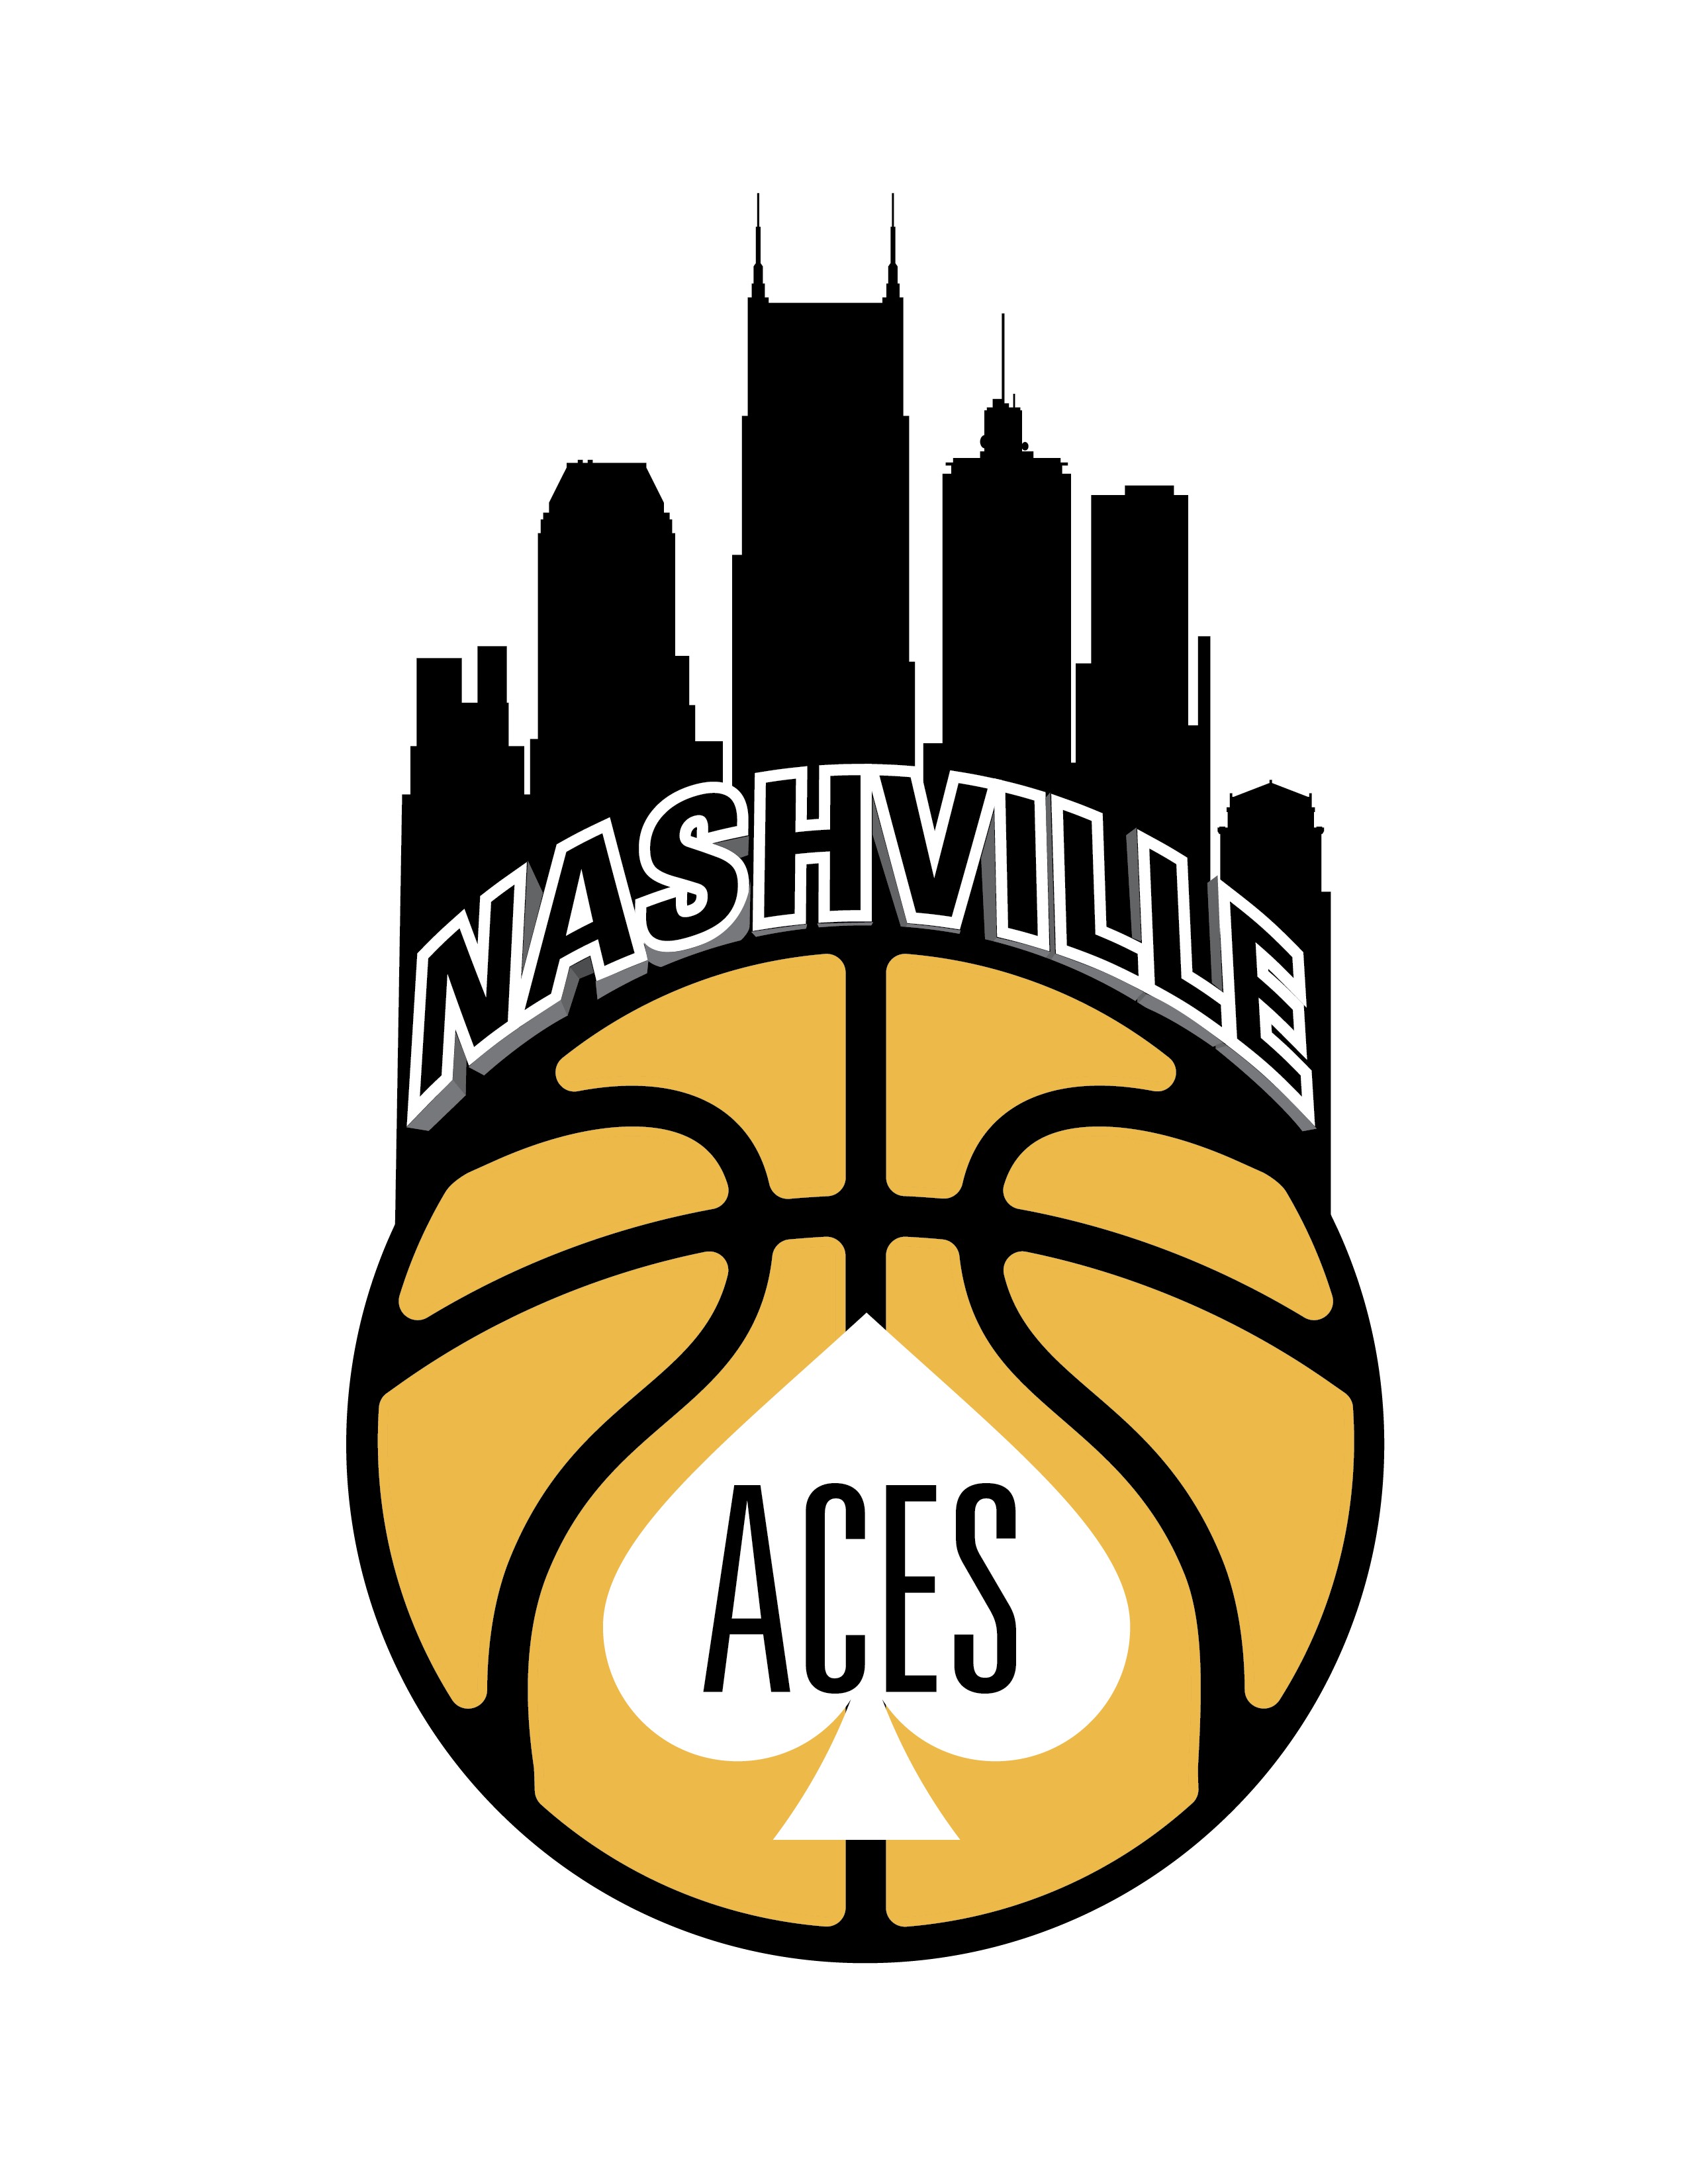 NASHVILLE ACES SET TO BEGIN PLAY IN NOVEMBER ABA Basketball